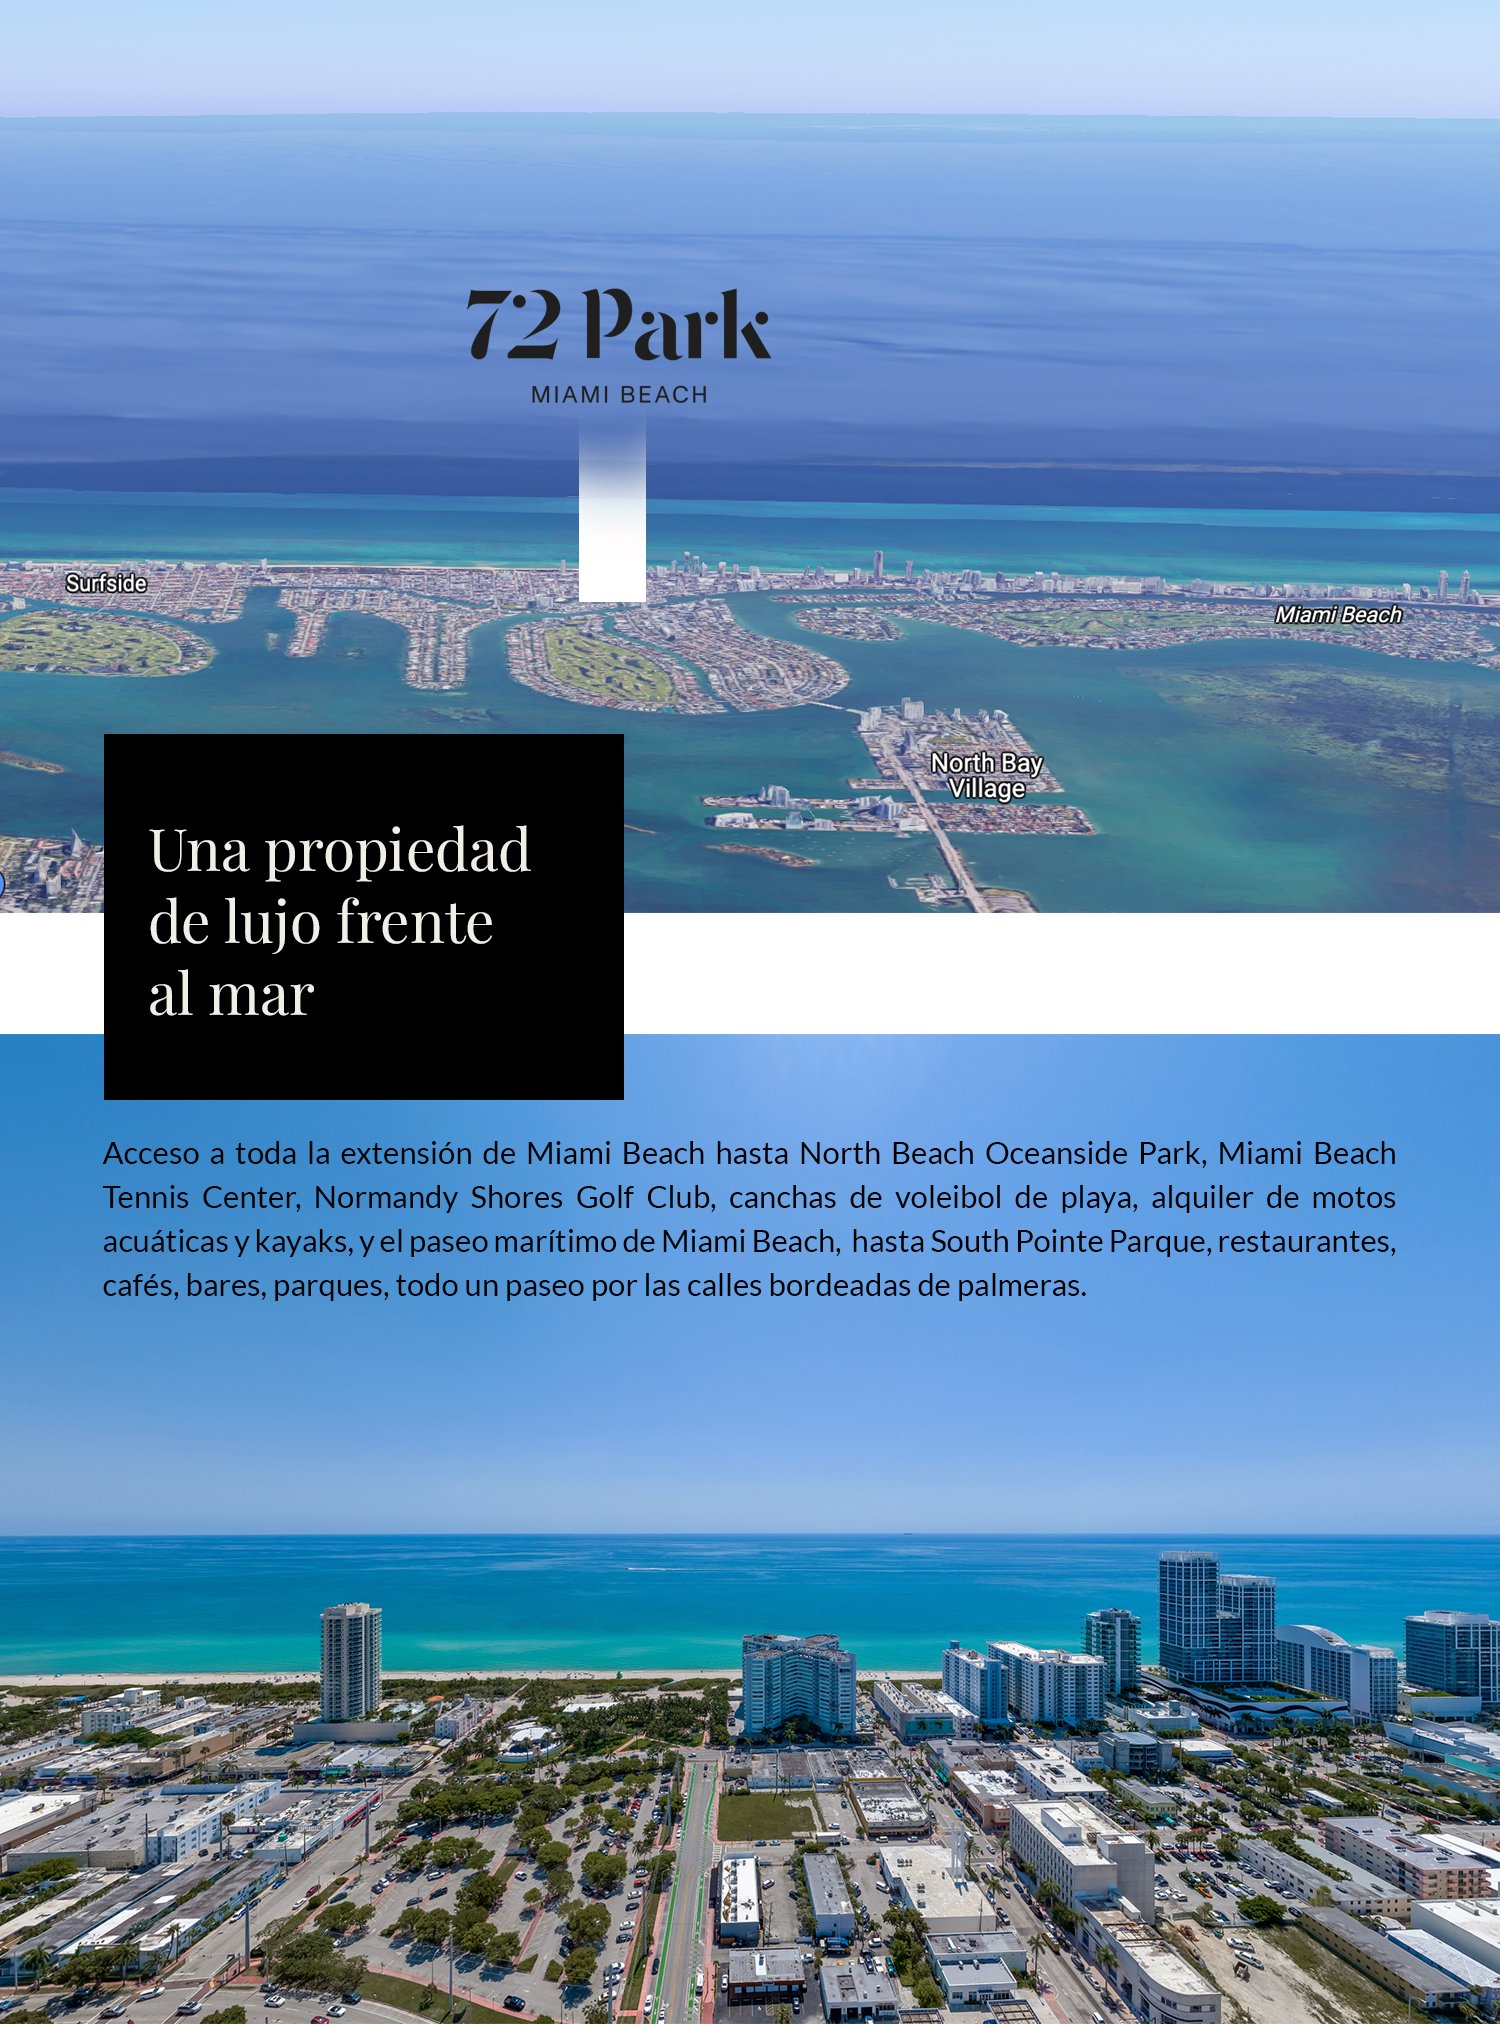 72 Park Miami Beach